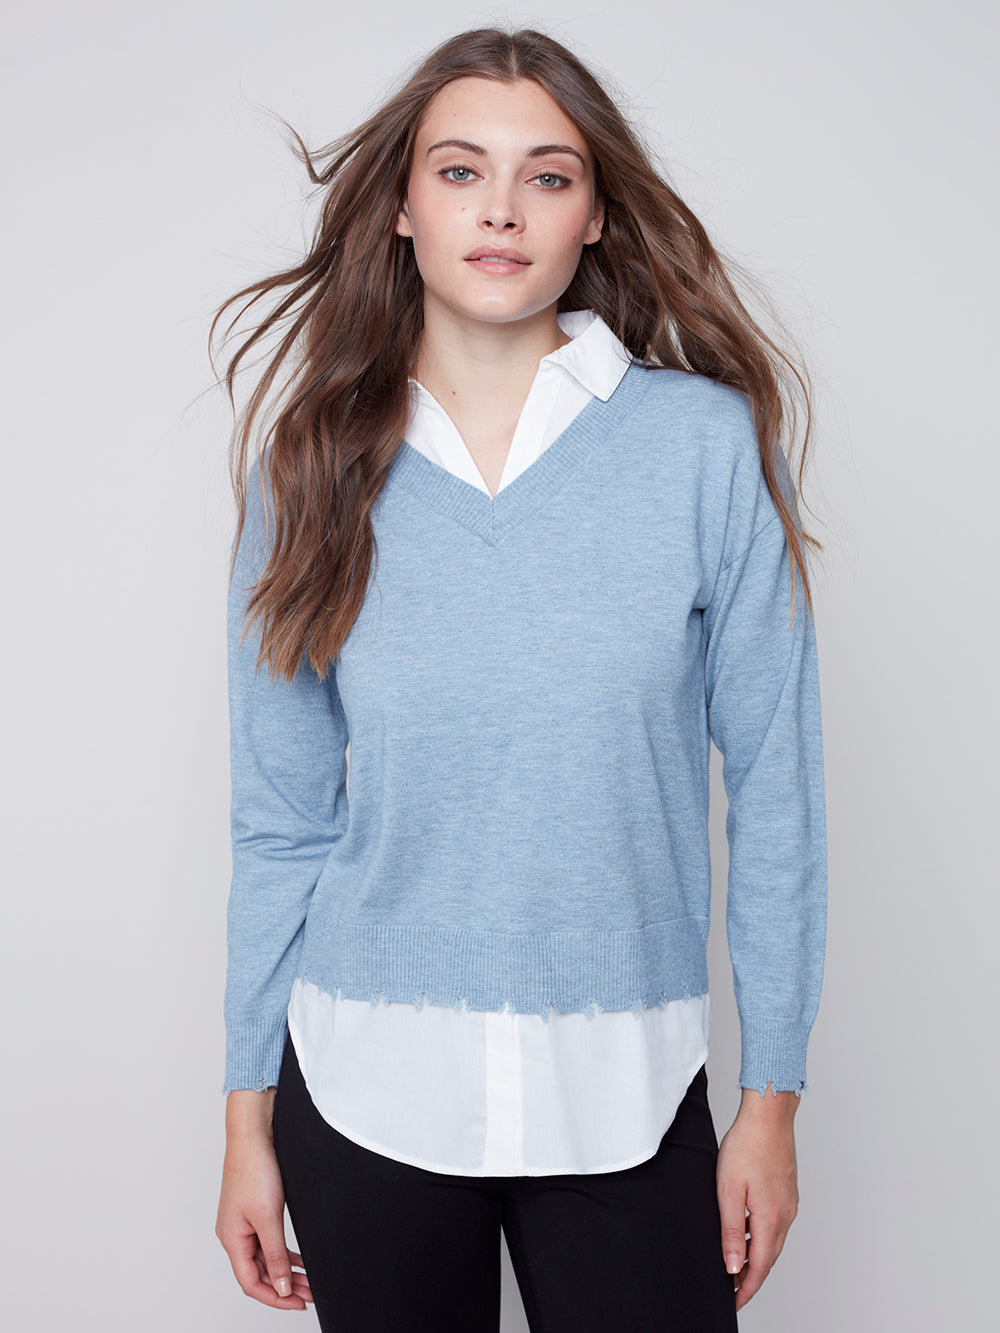 Charlie B Sweater w/ Shirt Collar - Style C2568